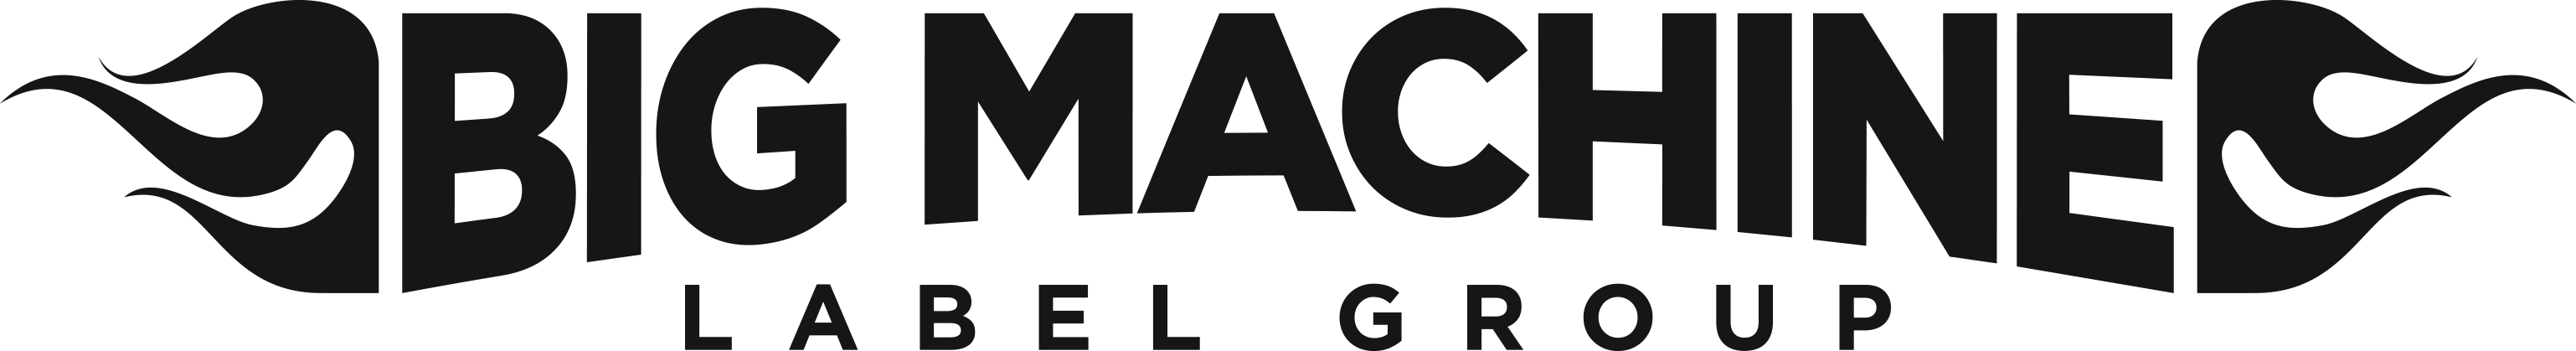 Big Machine Label Group logo